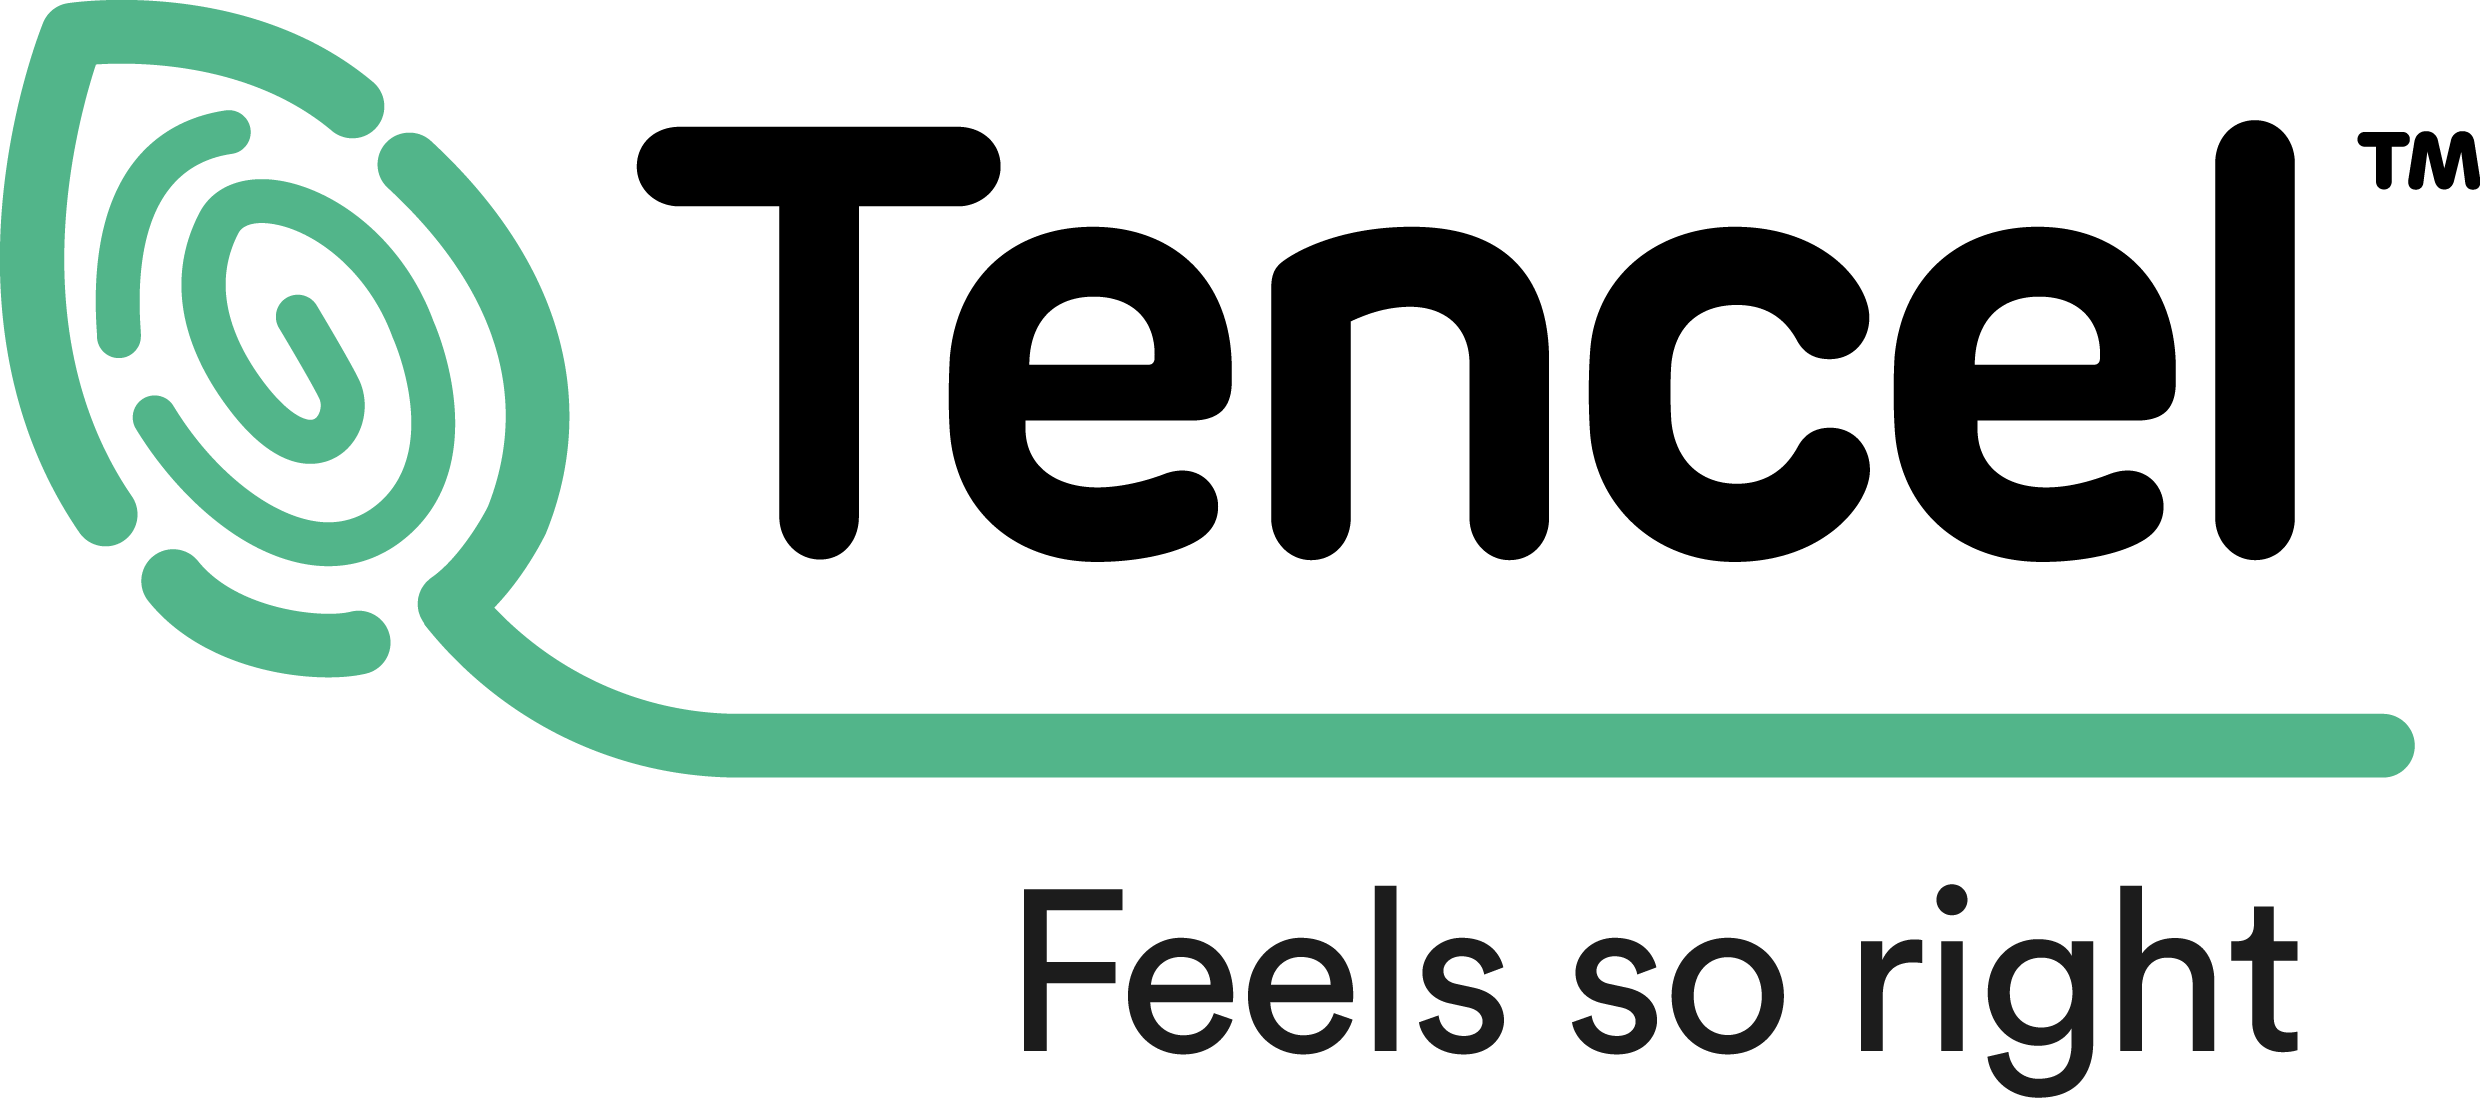 Logo Tencel